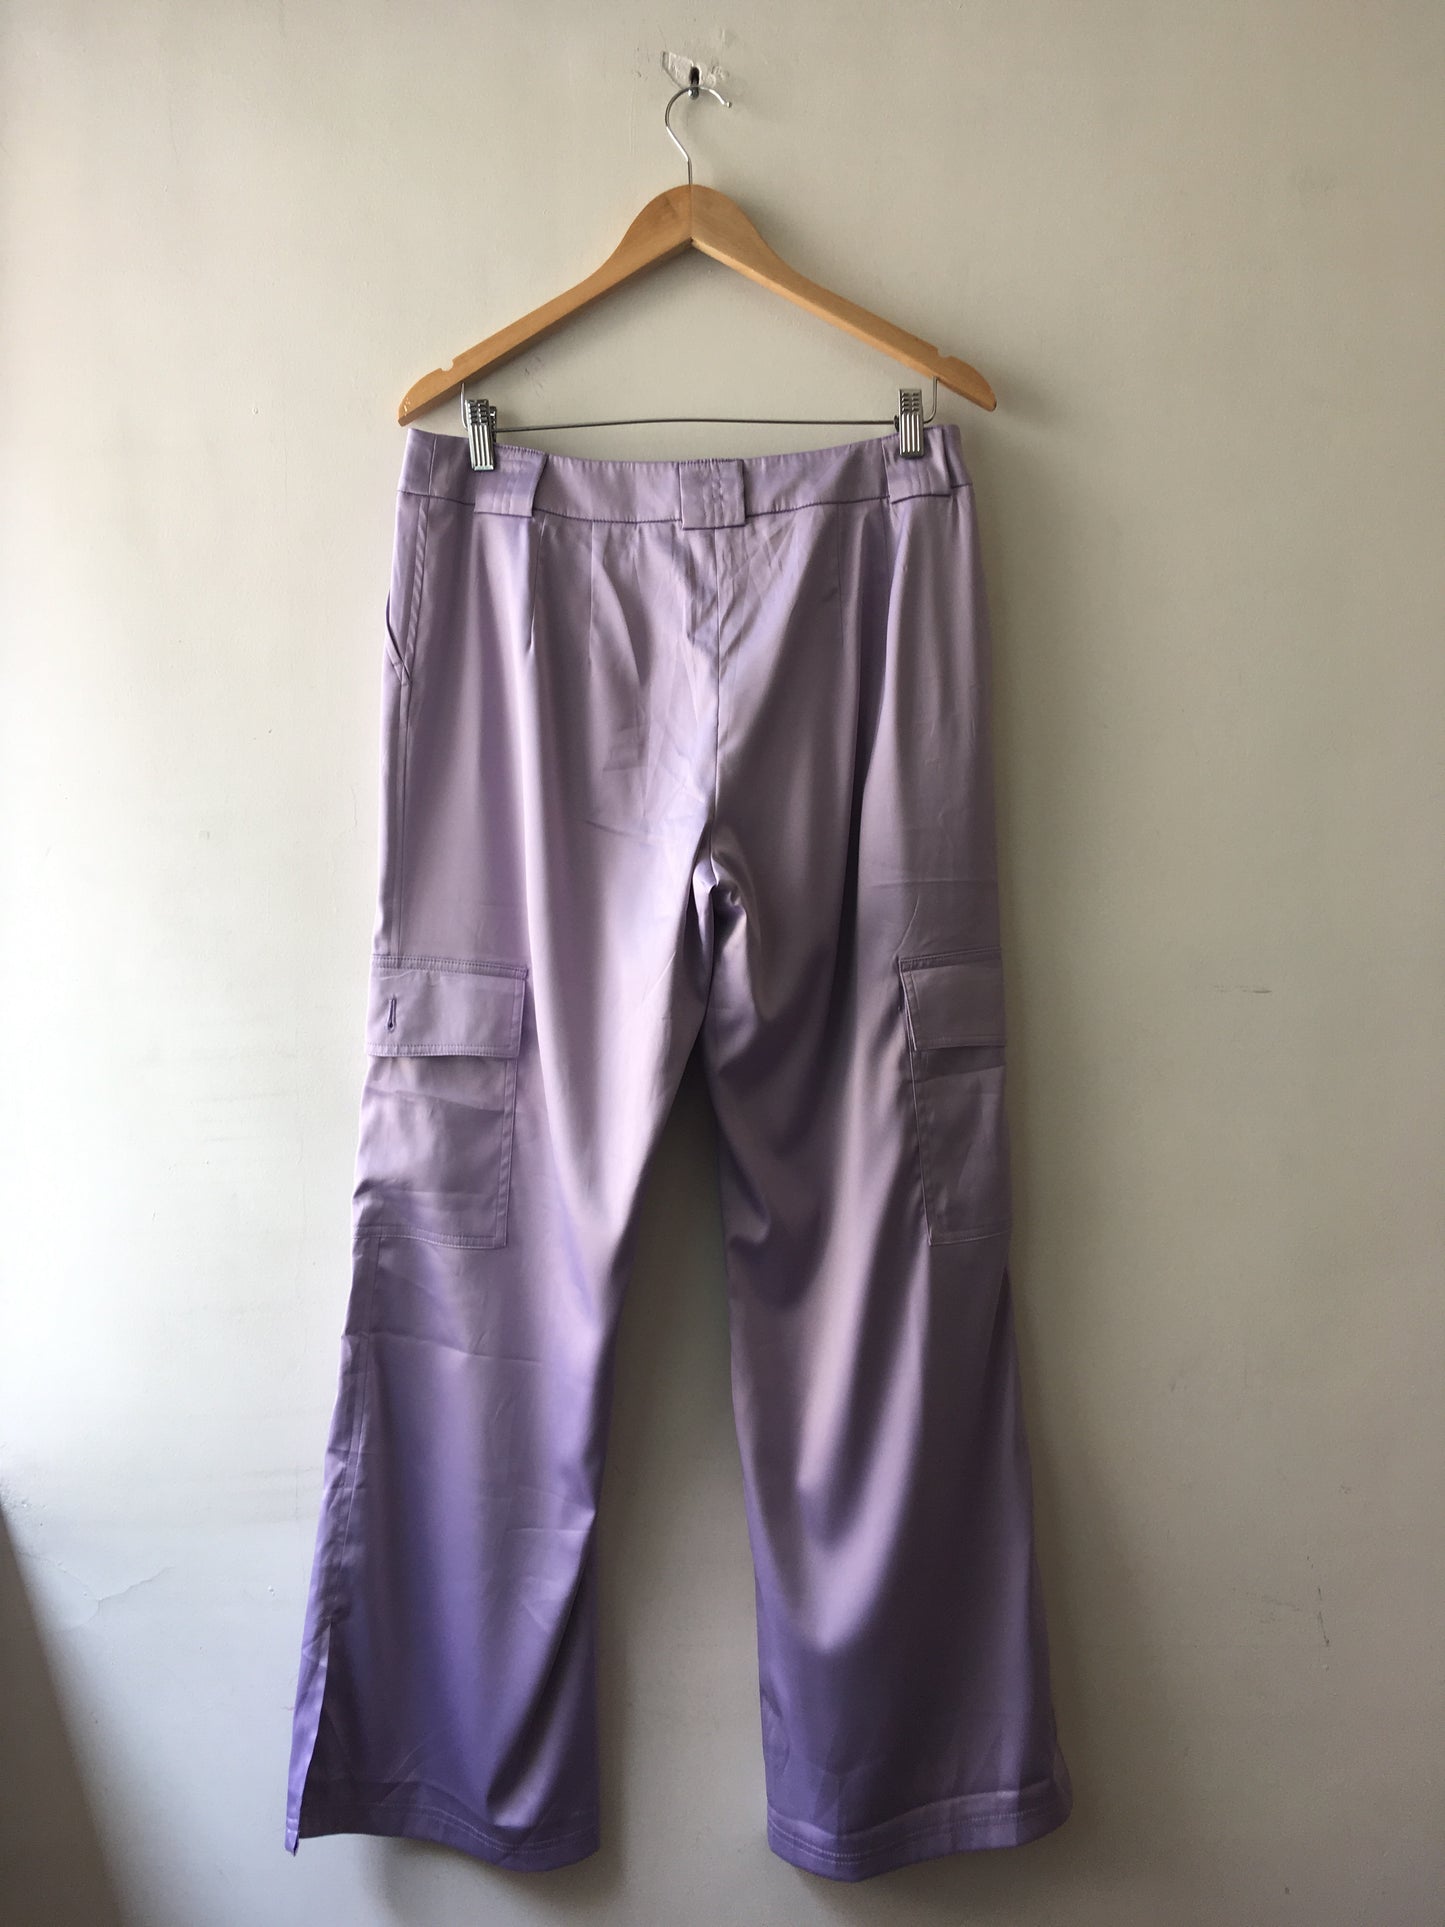 Lilac pants